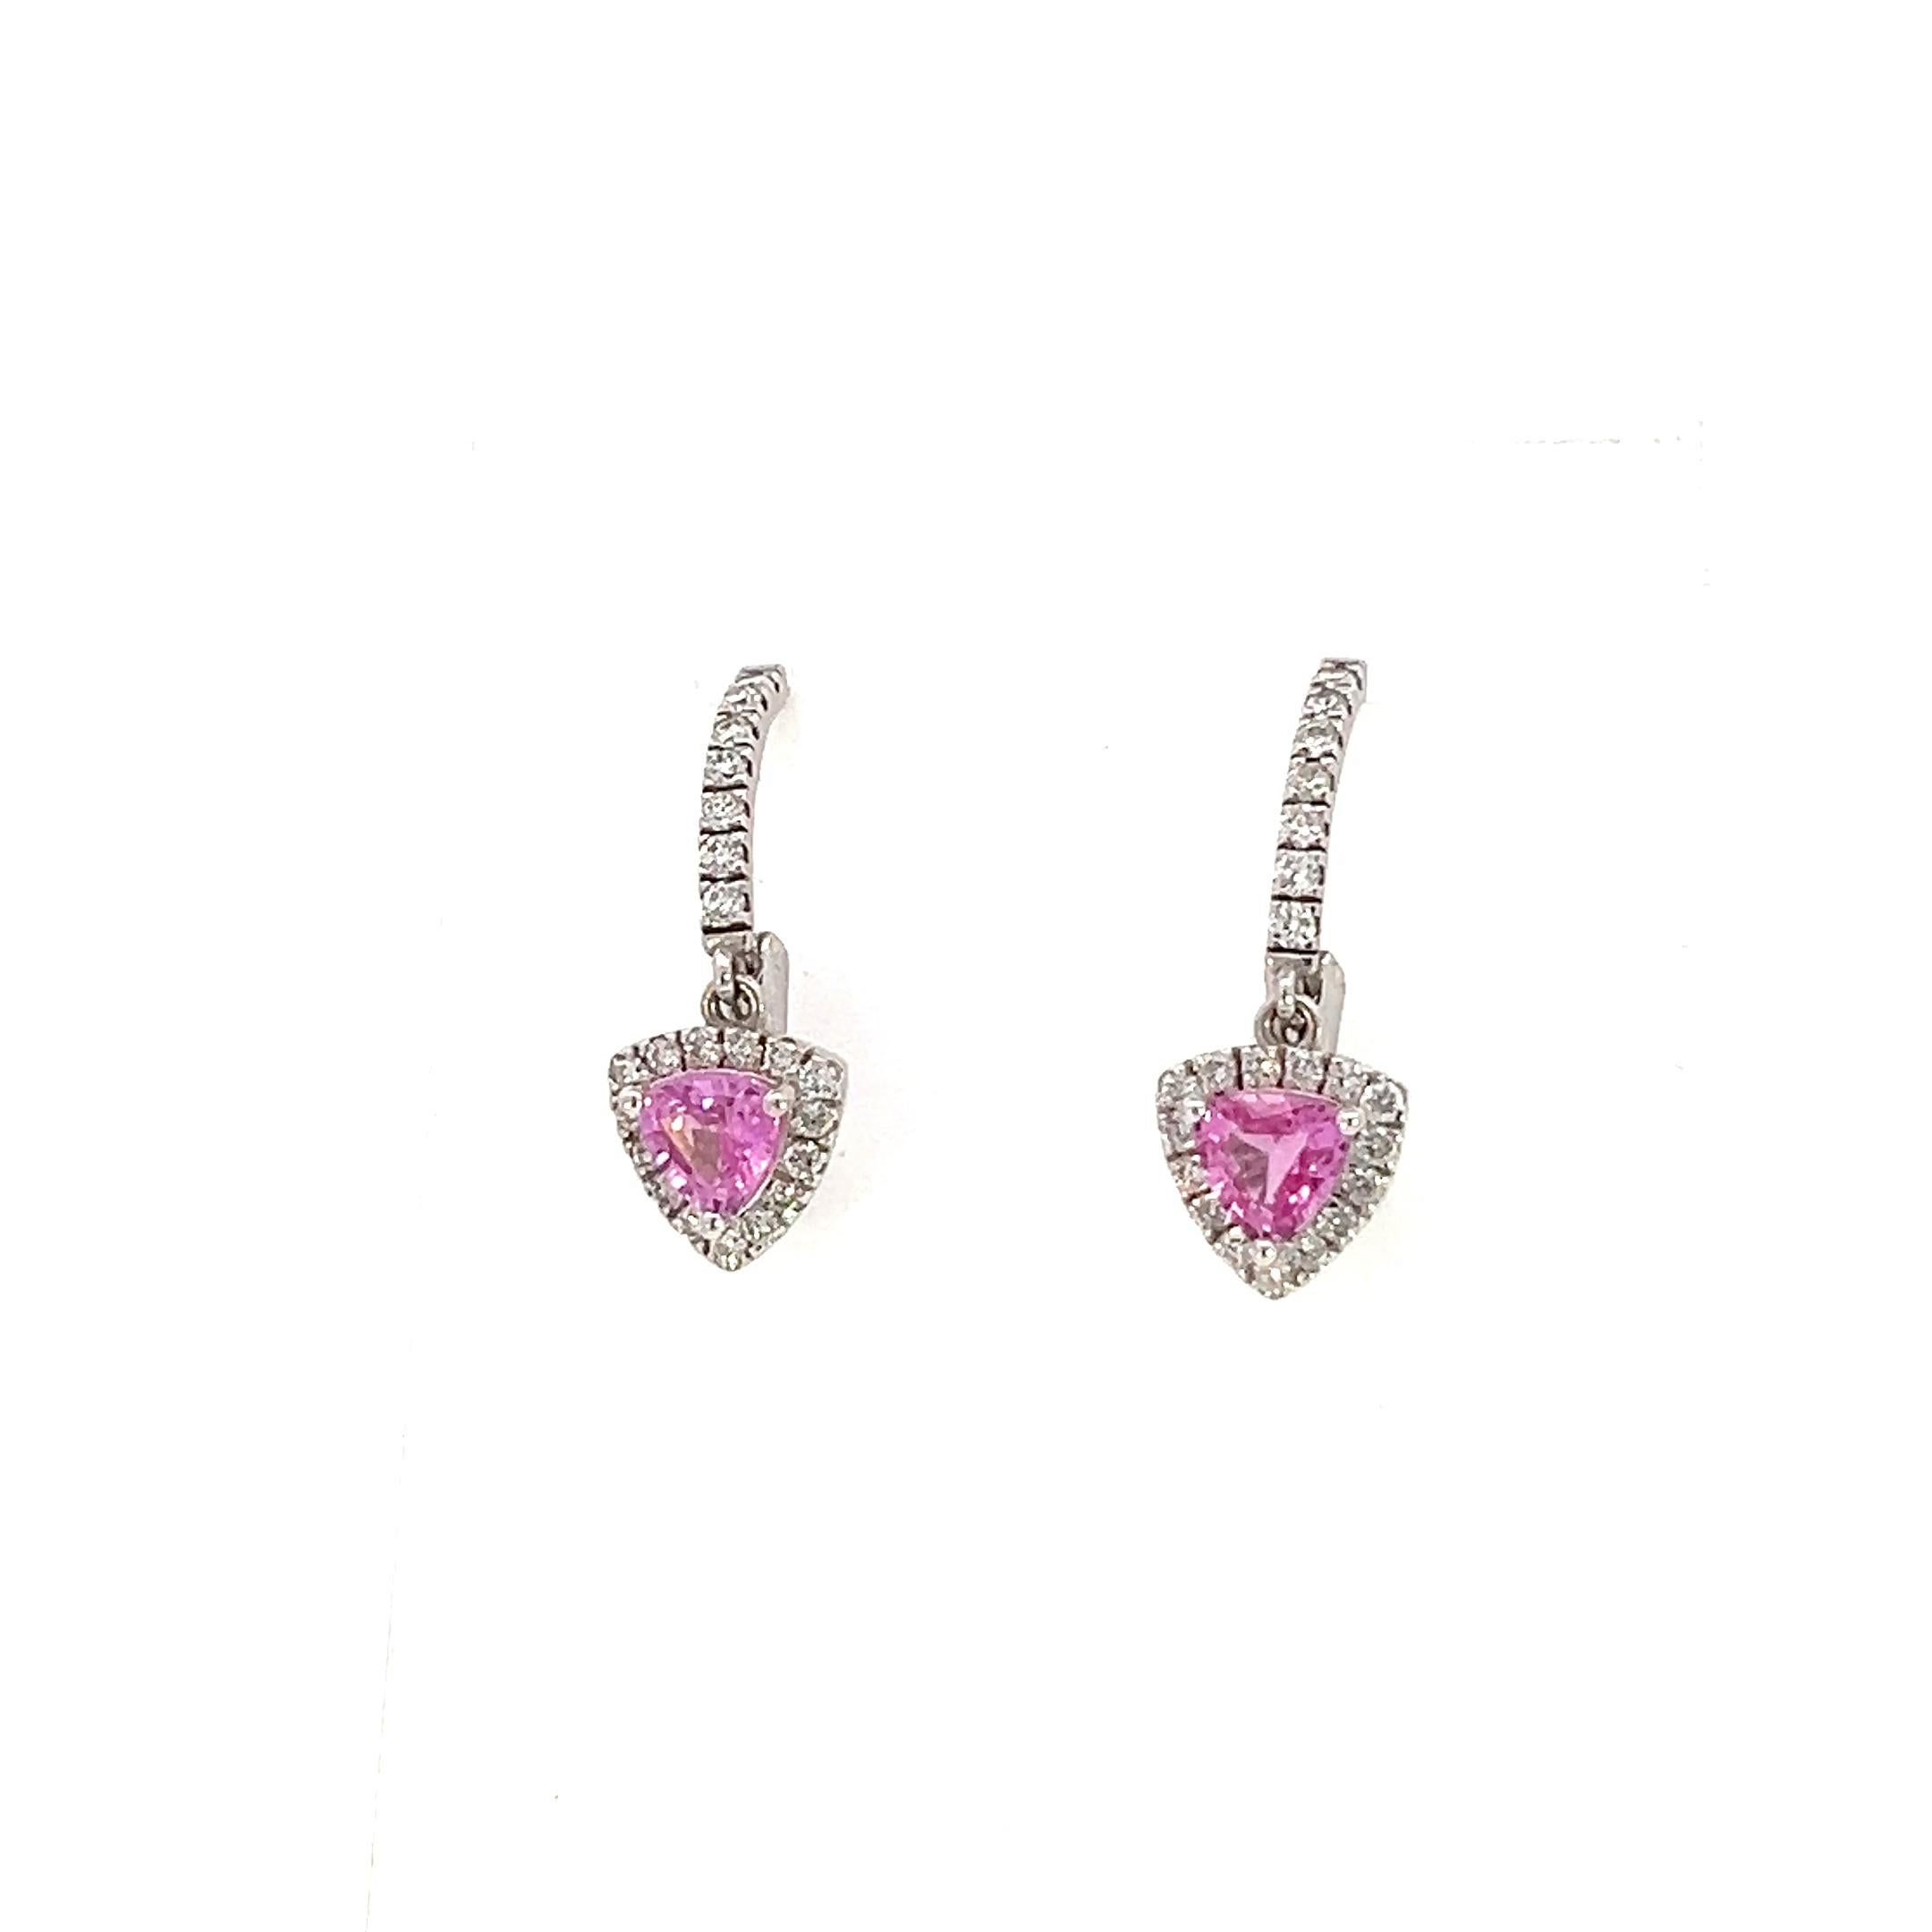 Women's Natural Sapphire Diamond Earrings 14k W Gold 2.01 TCW Certified For Sale